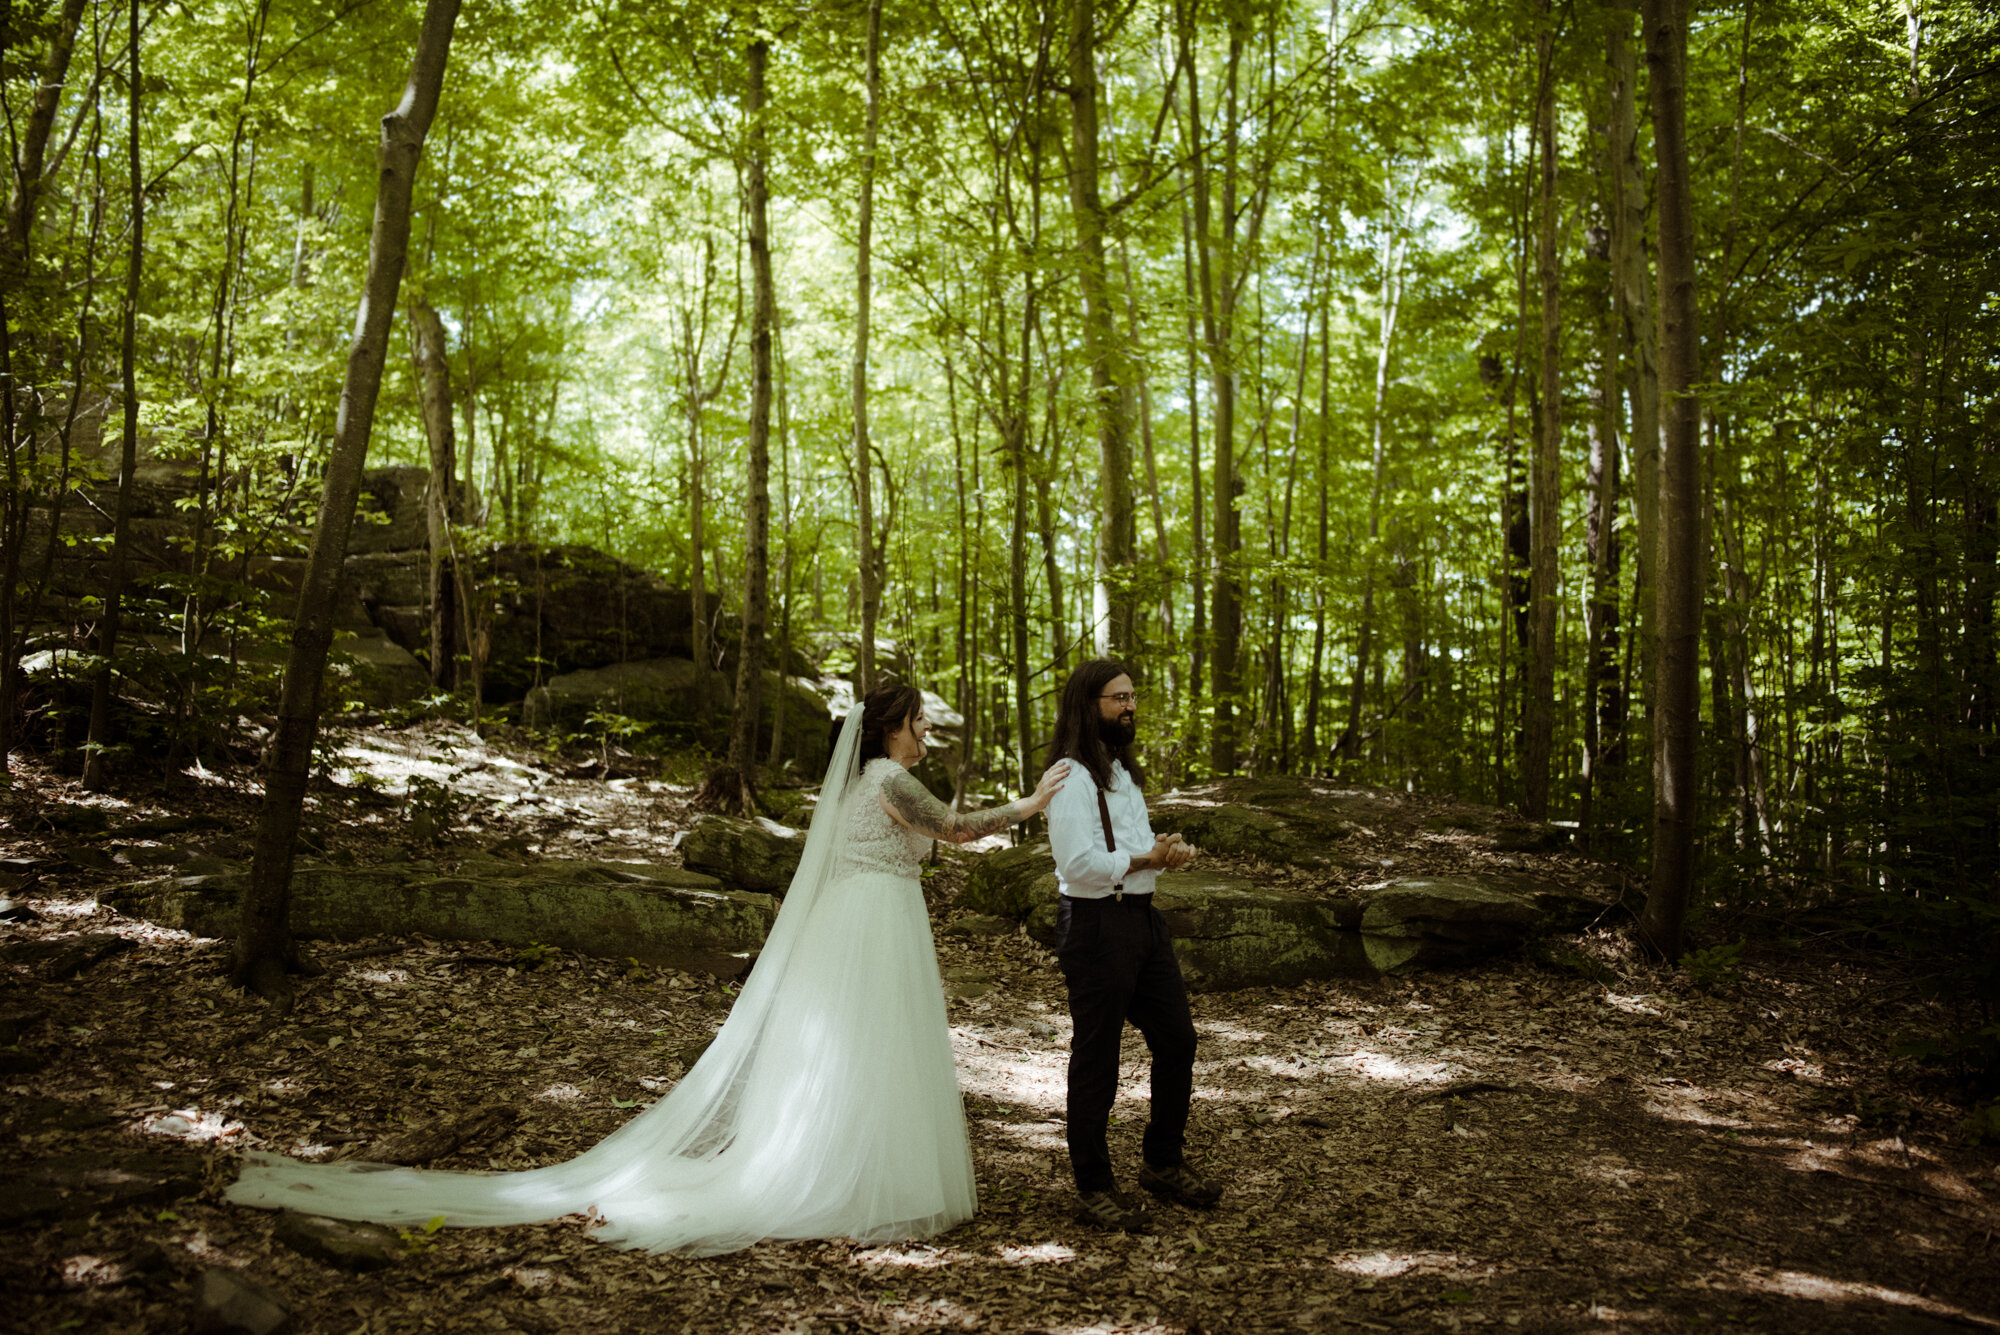 Mandy and Scott - Worlds End State Park Wedding - Backyard Pennsylvania Wedding - White Sails Creative Photography_15.jpg